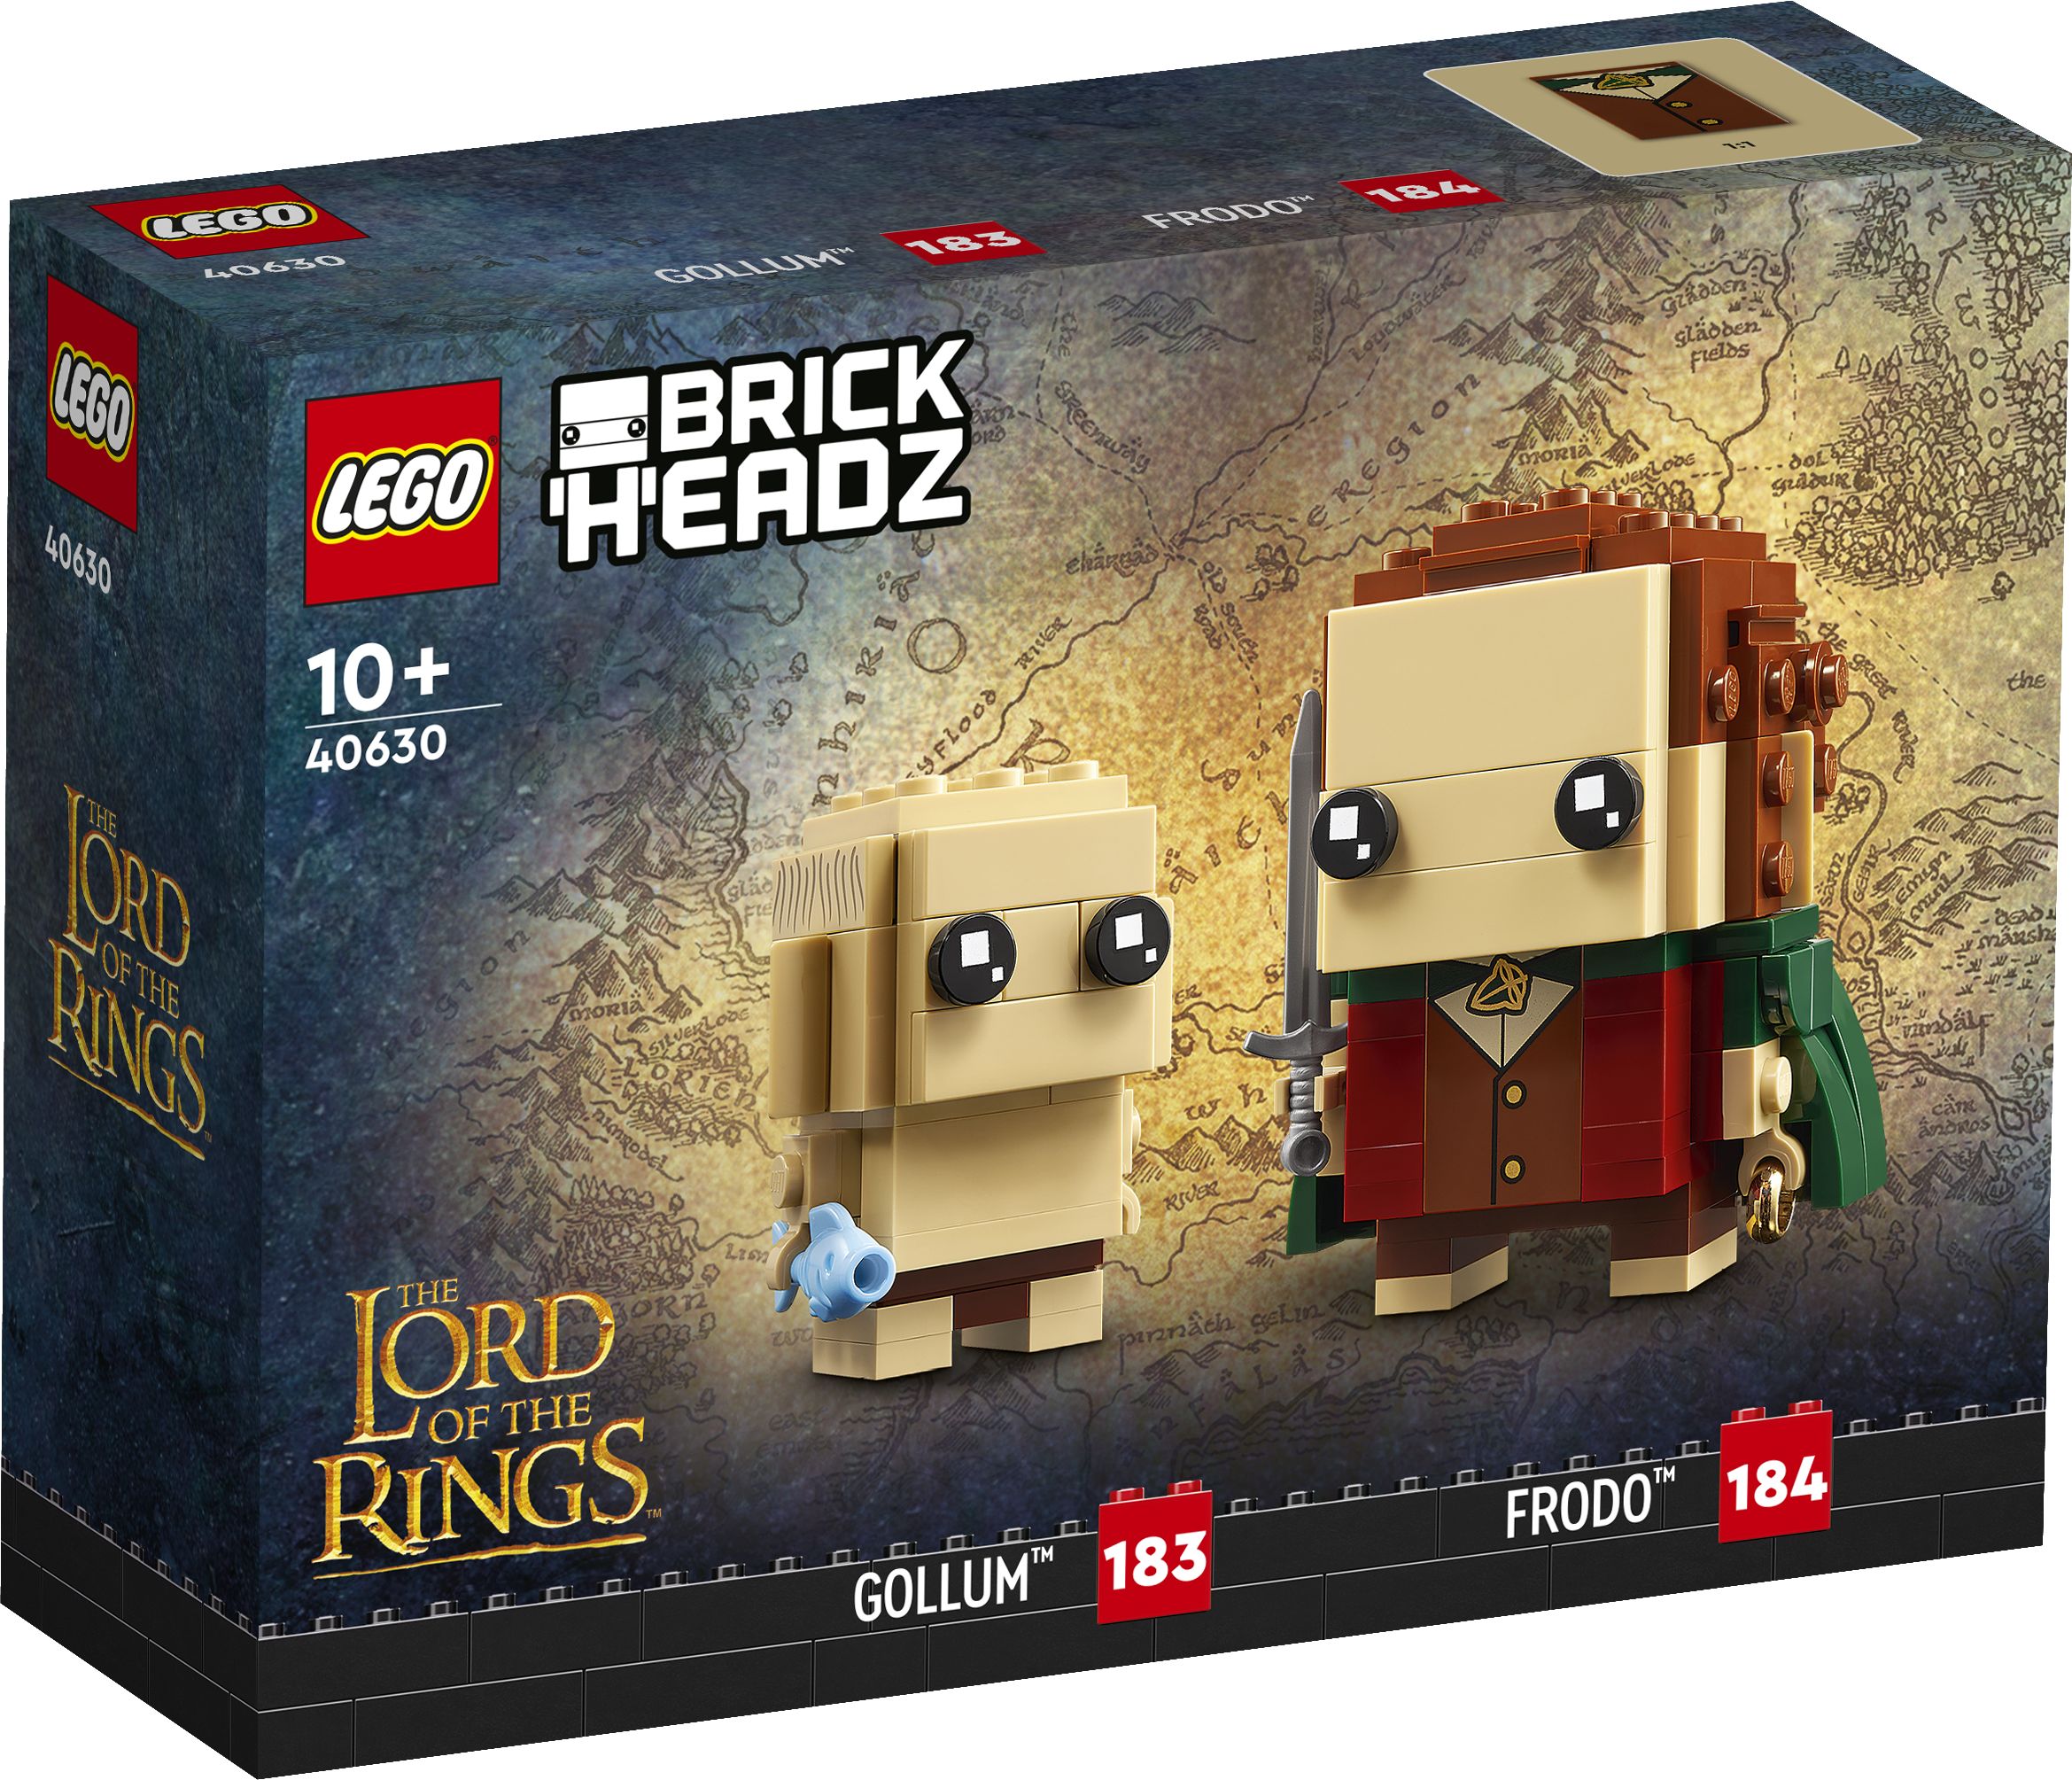 LEGO BrickHeadz 40630 Frodo™ und Gollum™ LEGO_40630_Box1_v29.jpg